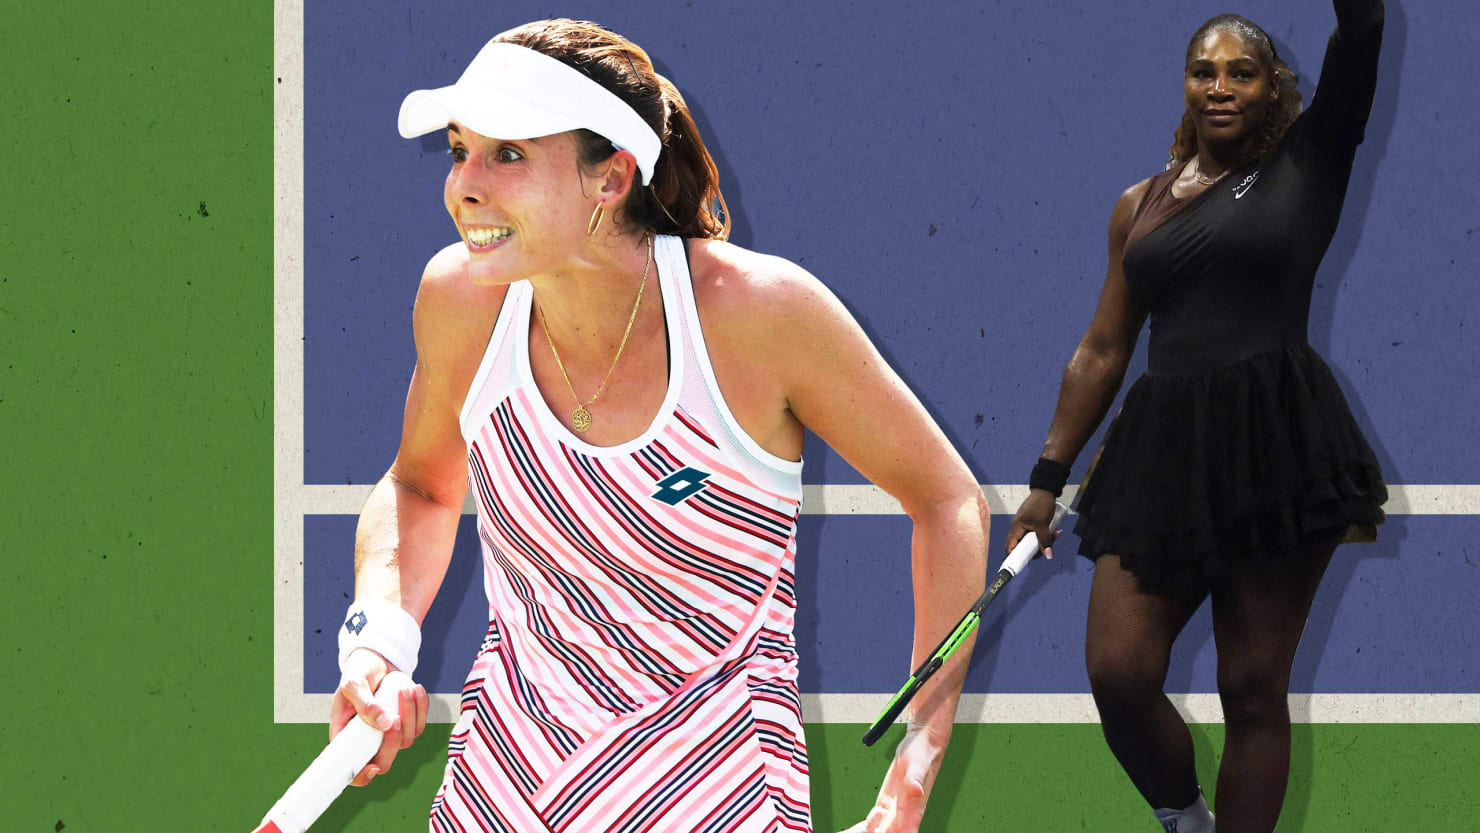 Martina Navratilova: Let Female Tennis Players Change Their Shirts on Court